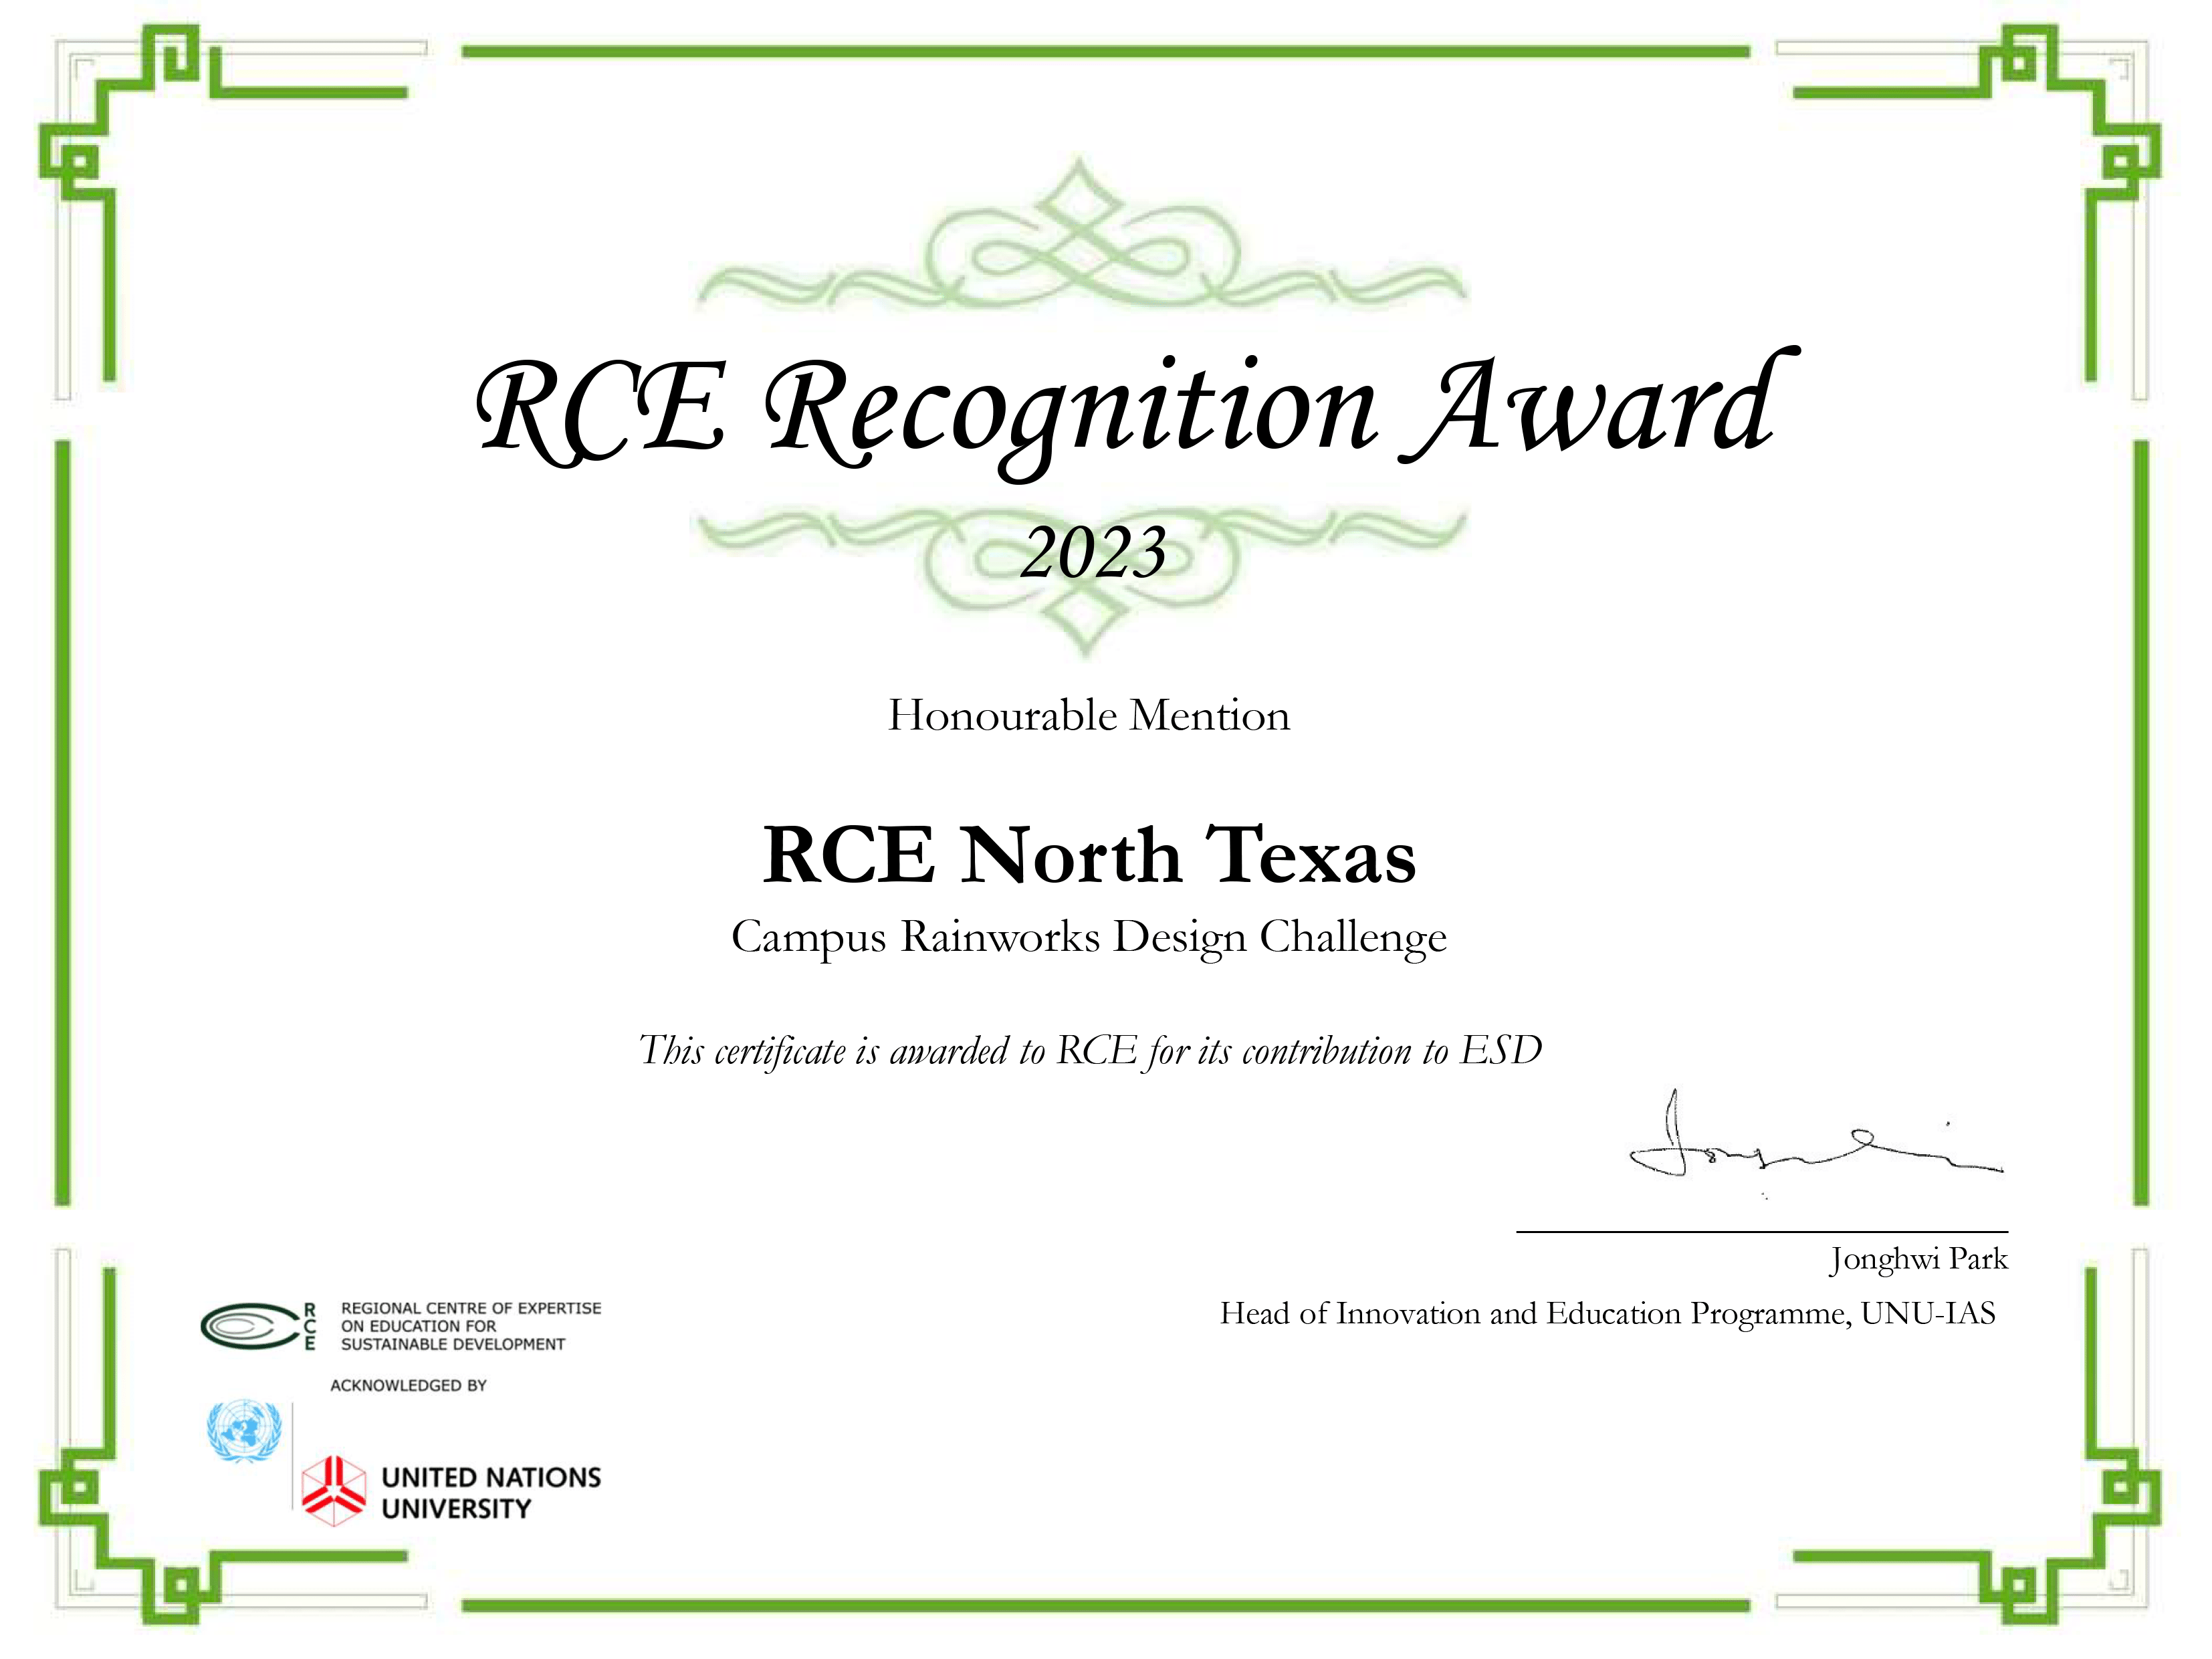 2023 RCE Recognition Award for Campus Rain Design Challenge